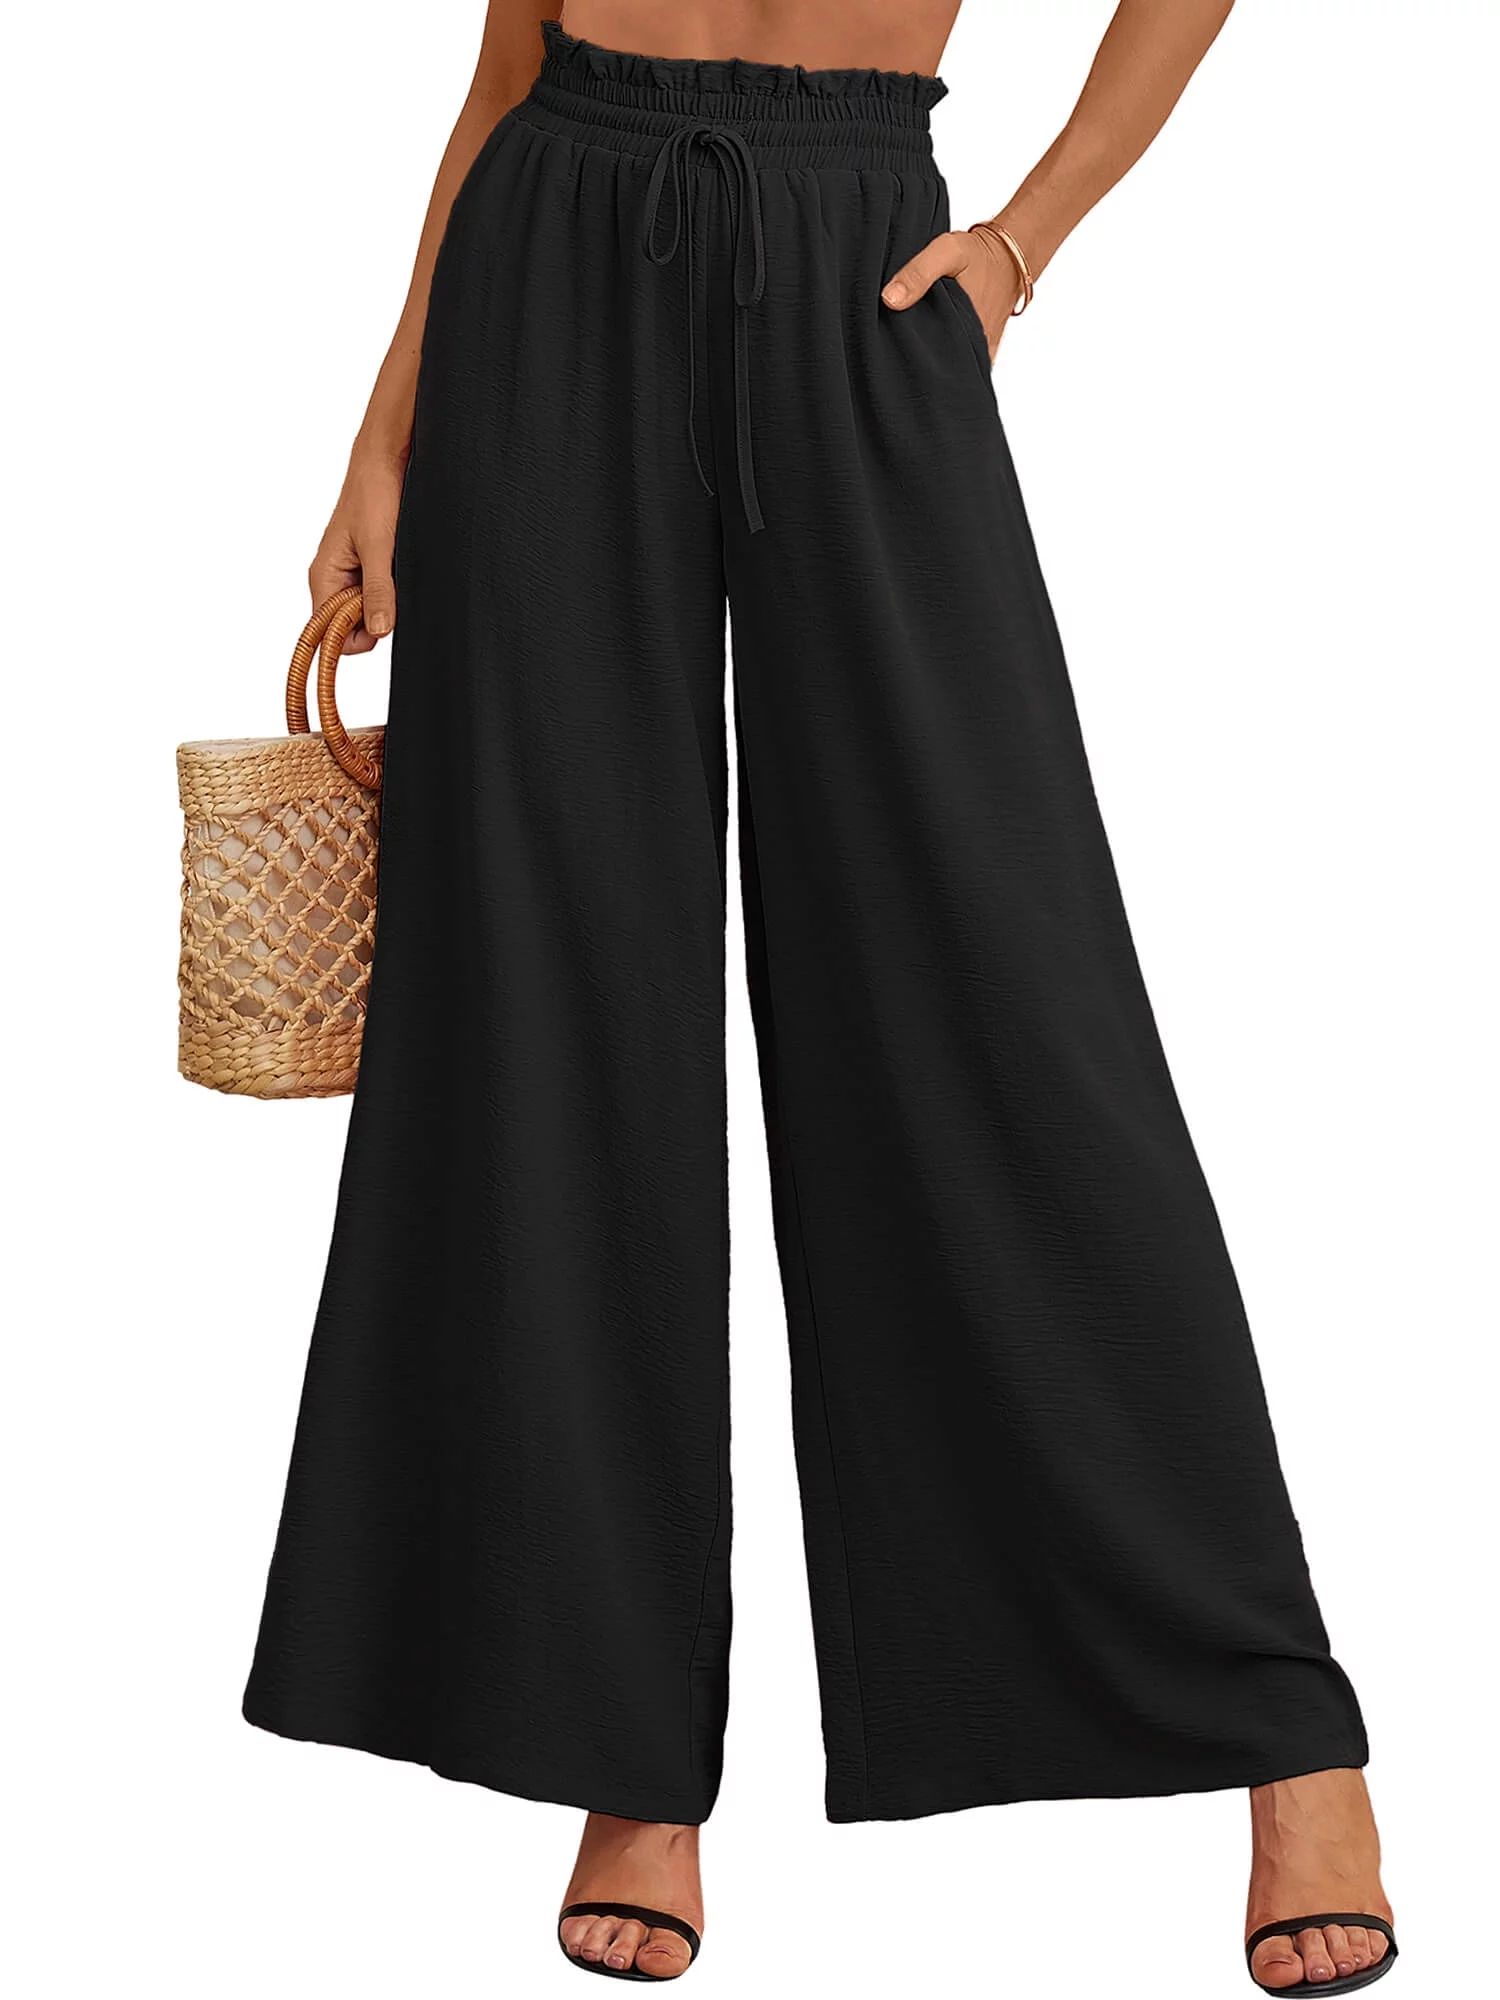 SHOWMALL Women's Pants Casual Elastic Waist Wide Leg Pants Black S Palazzo Pants with Pockets | Walmart (US)